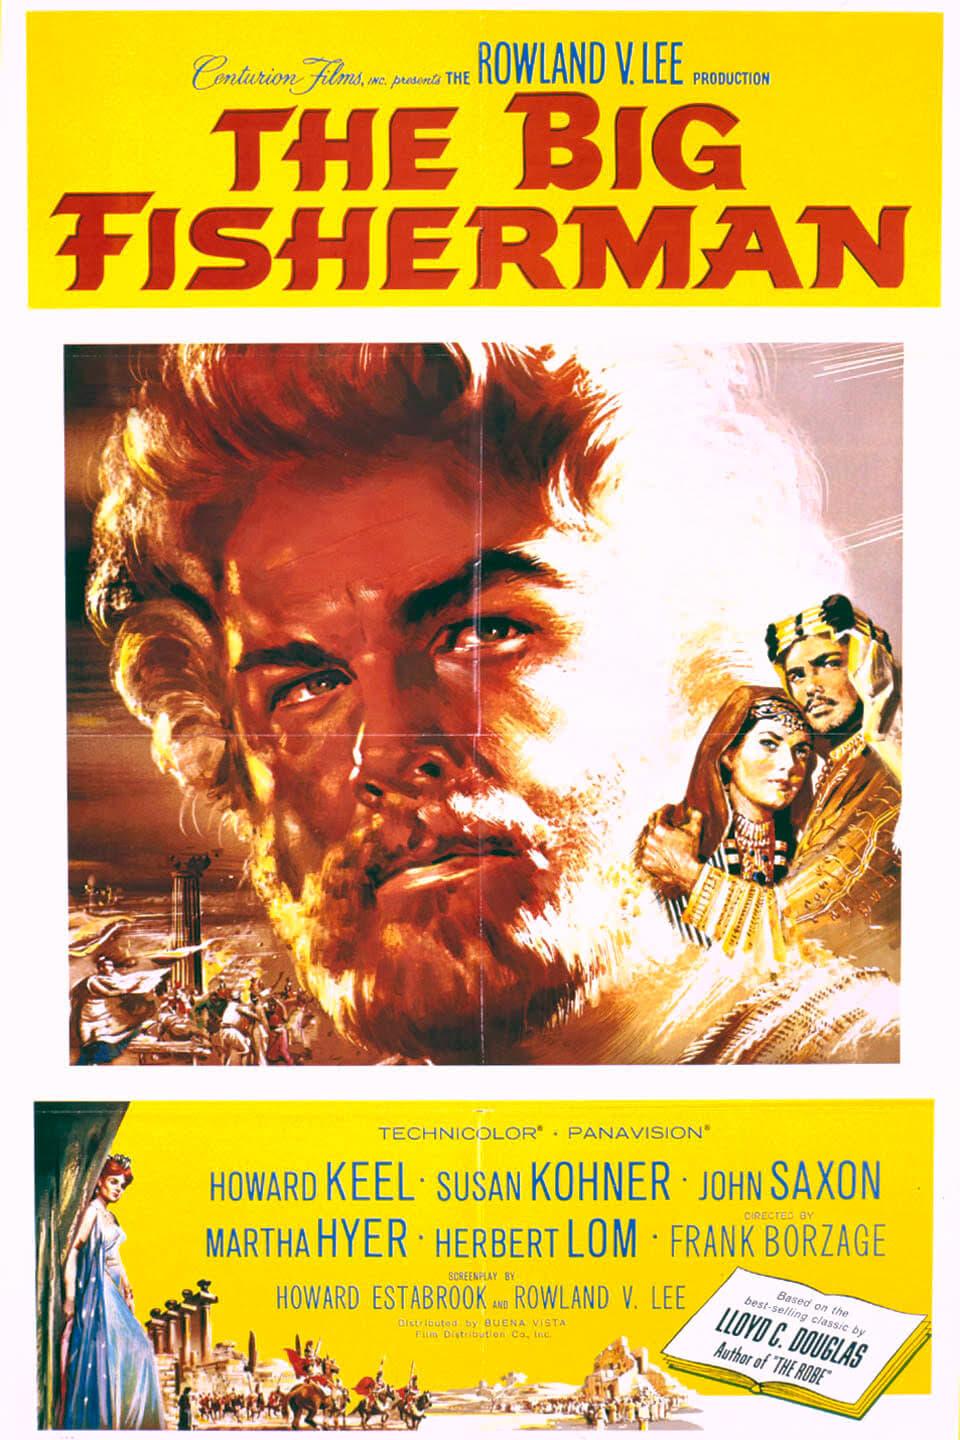 The Big Fisherman poster